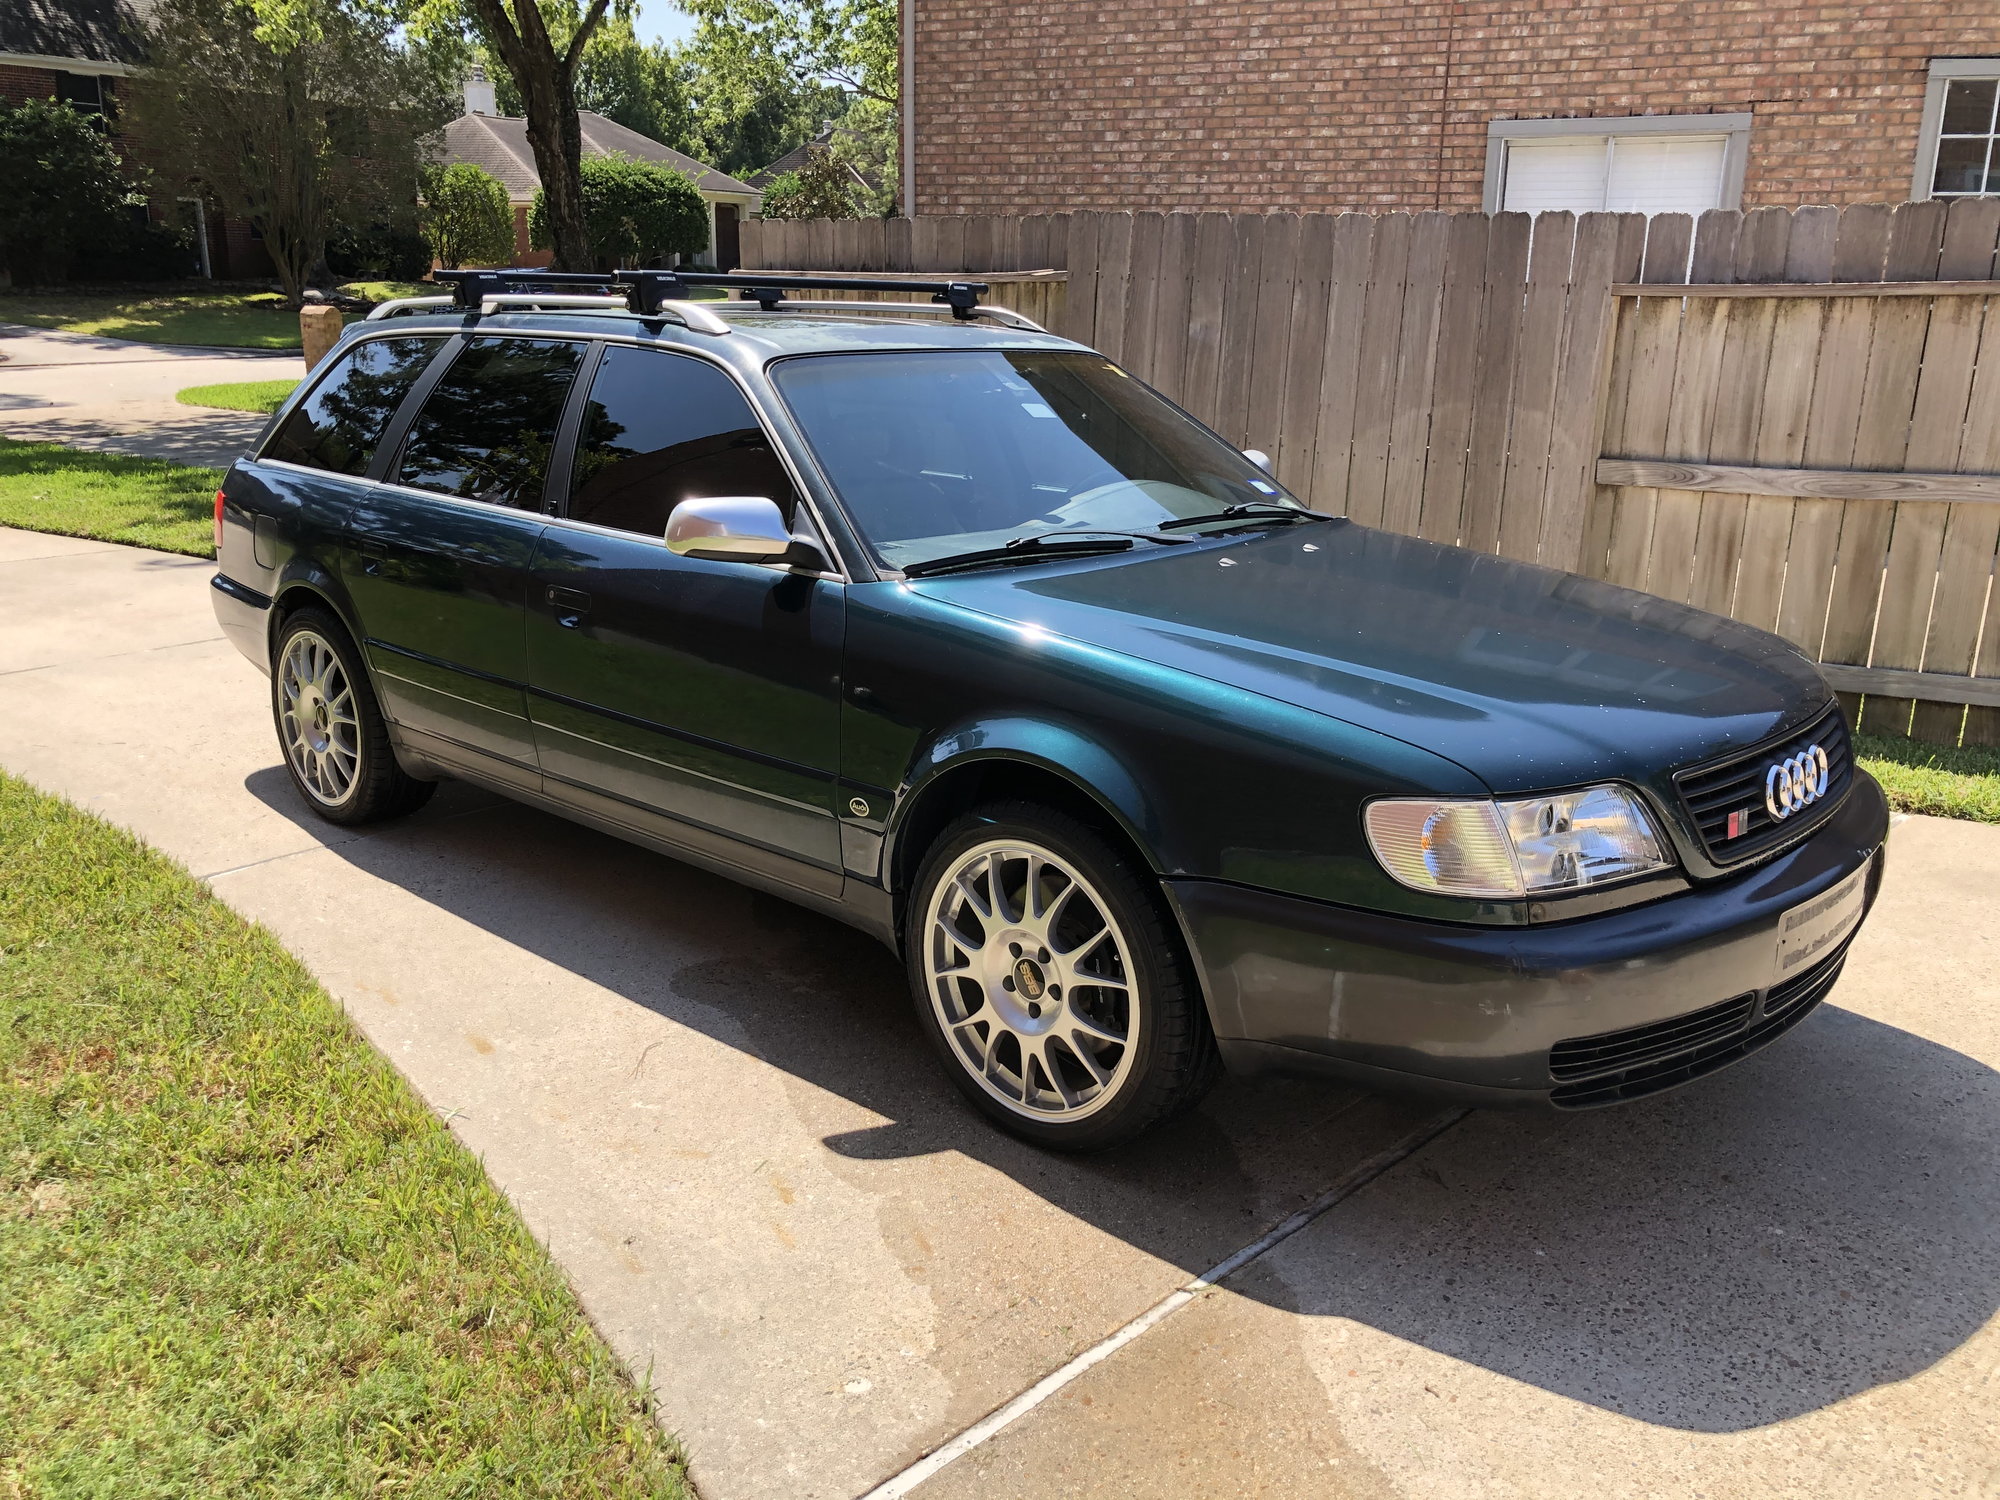 1995 Audi S6 - 1995 Audi URS6 Avant Green/Ecru Houston TX - Used - VIN WAULA84A7SN111014 - 209,123 Miles - 5 cyl - AWD - Manual - Wagon - Other - Houston, TX 77345, United States